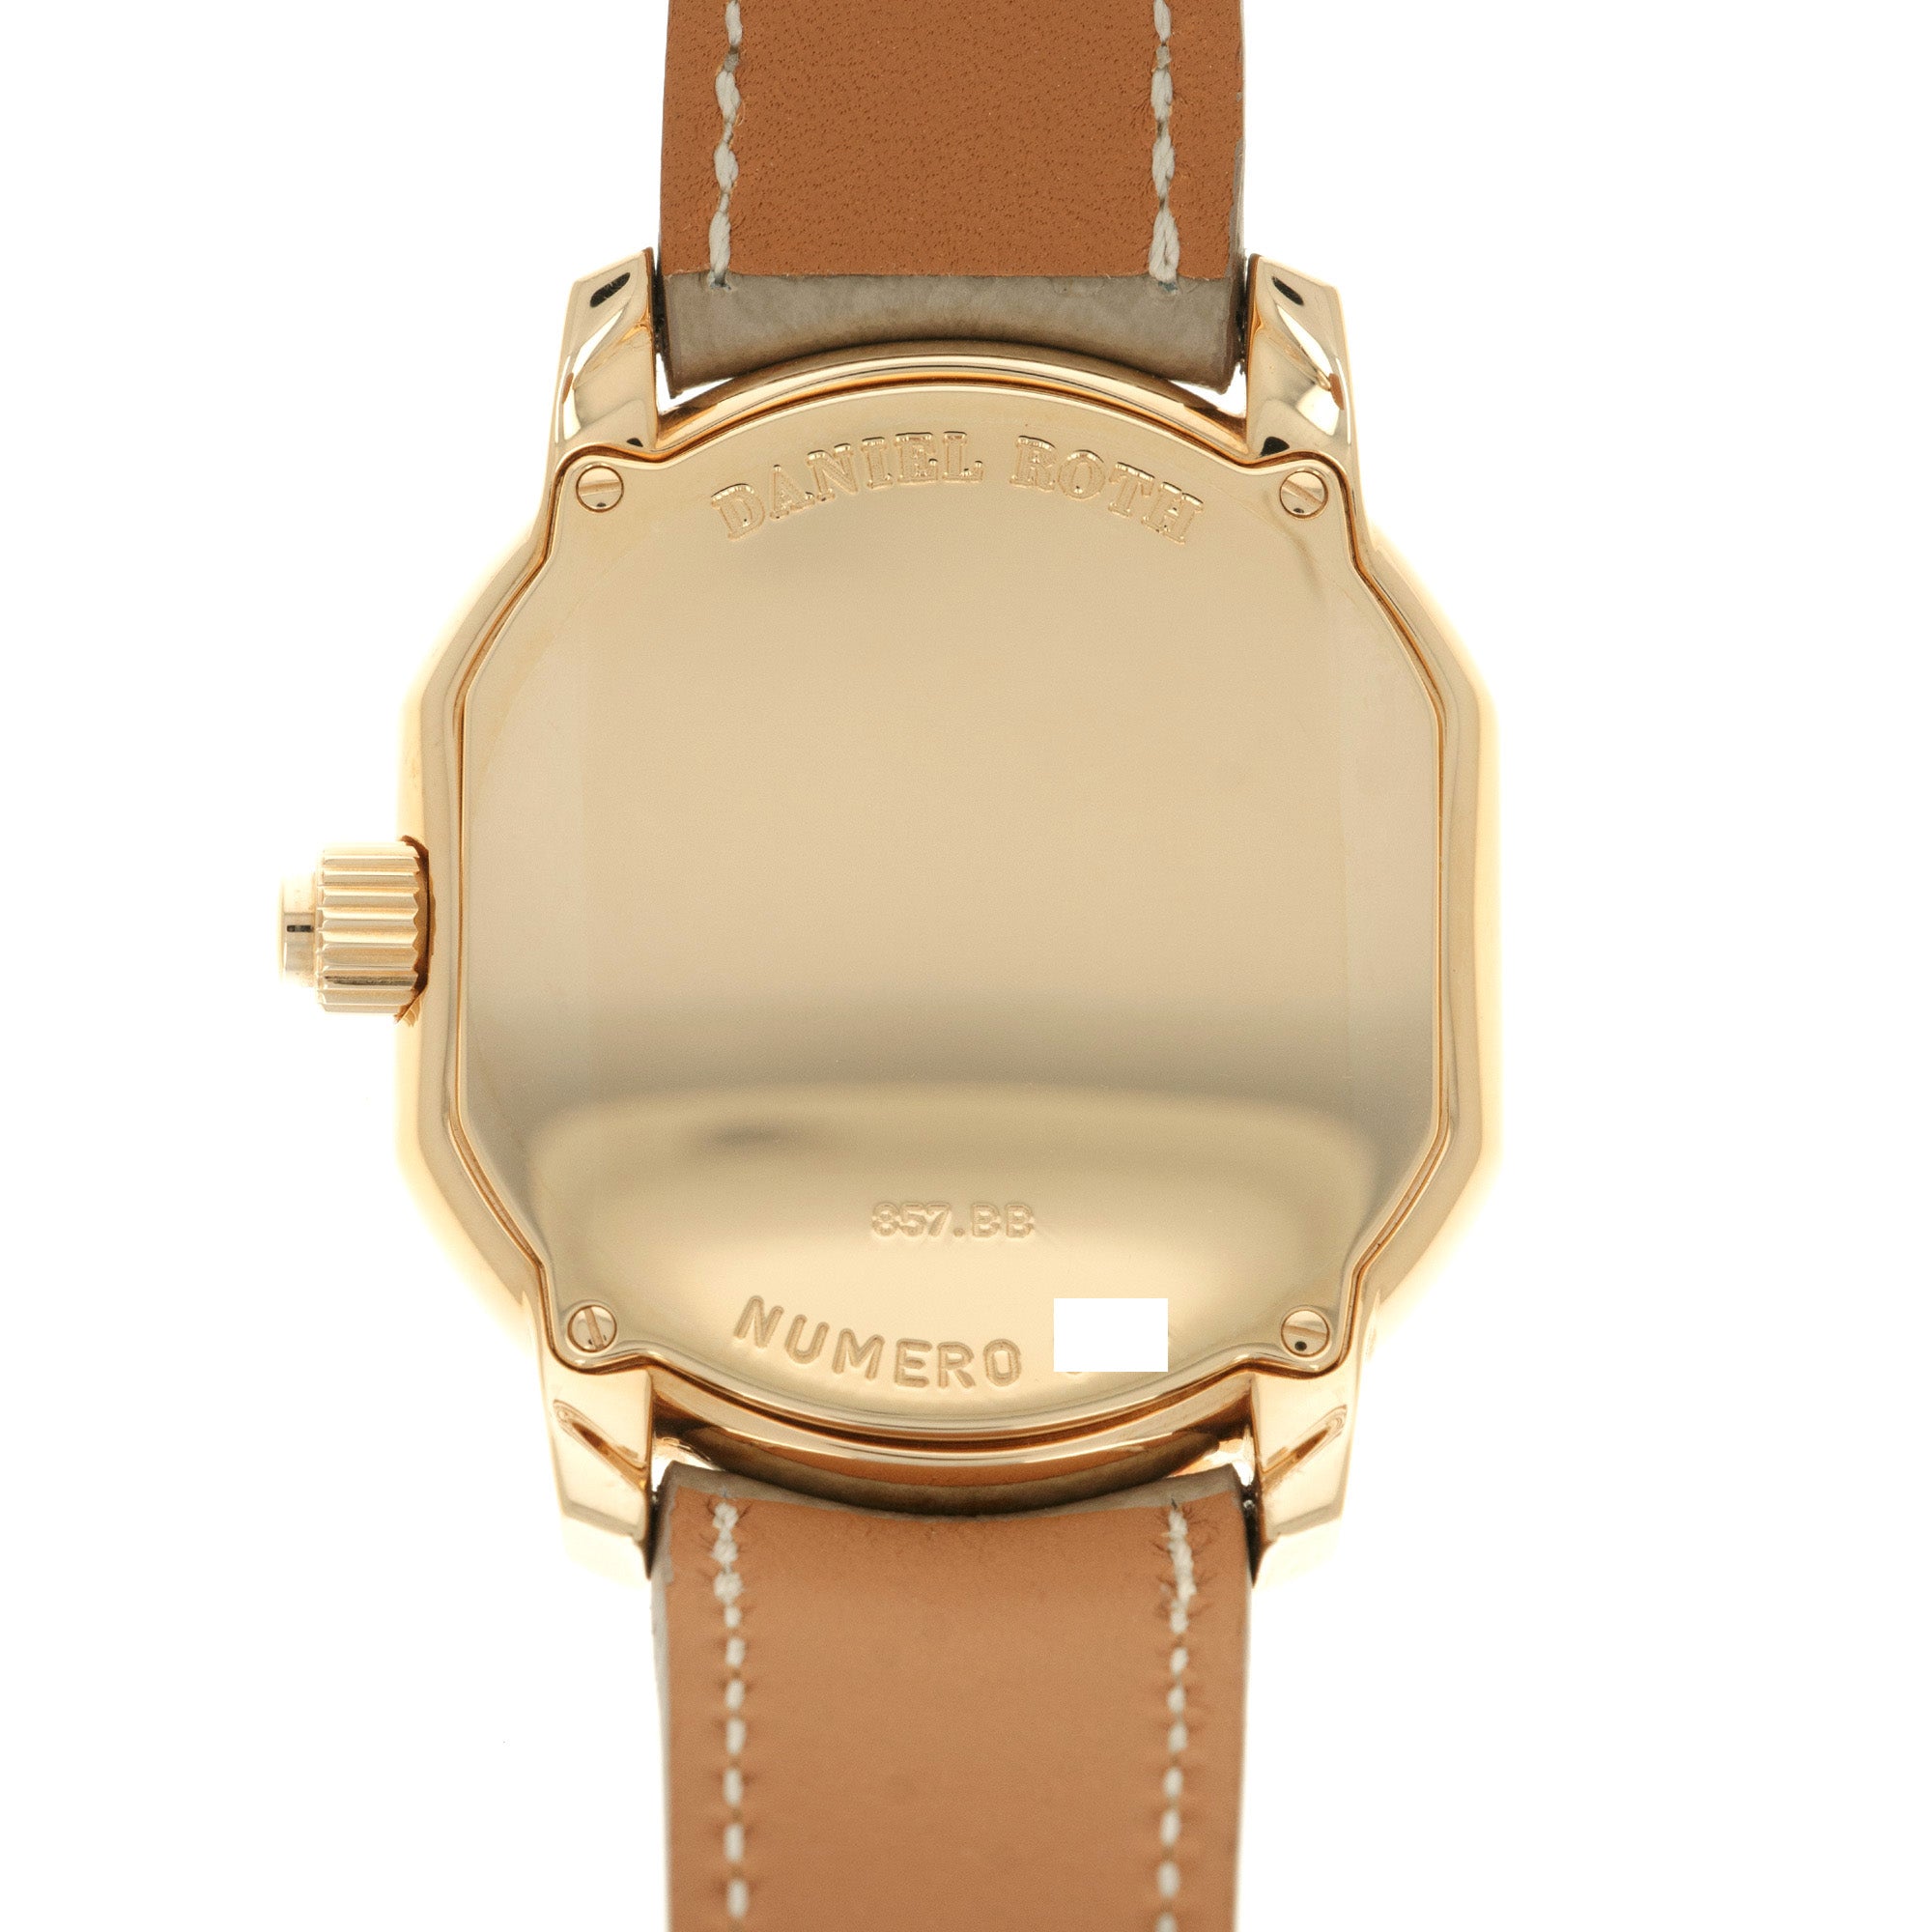 Daniel Roth - Daniel Roth Rose Gold Metropolitan World Time Watch - The Keystone Watches